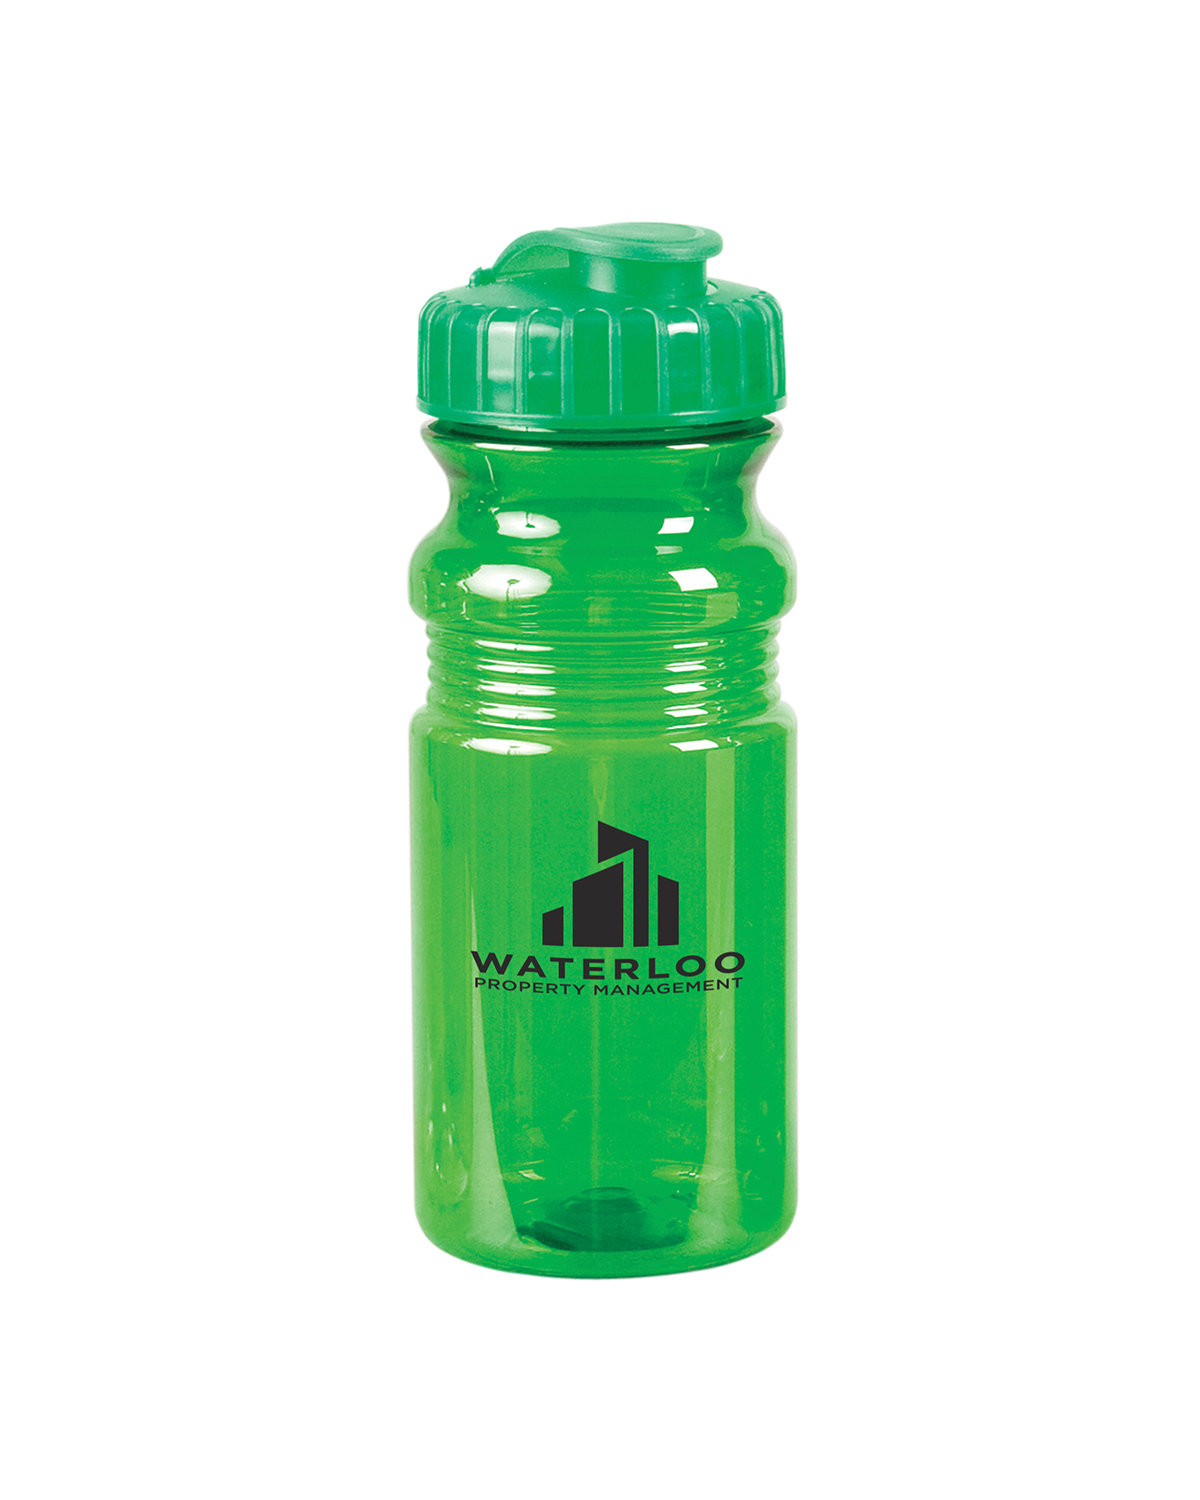 20 ounce Sport Water Bottles : BPA-Free, Made in USA, Sport Team Bottles